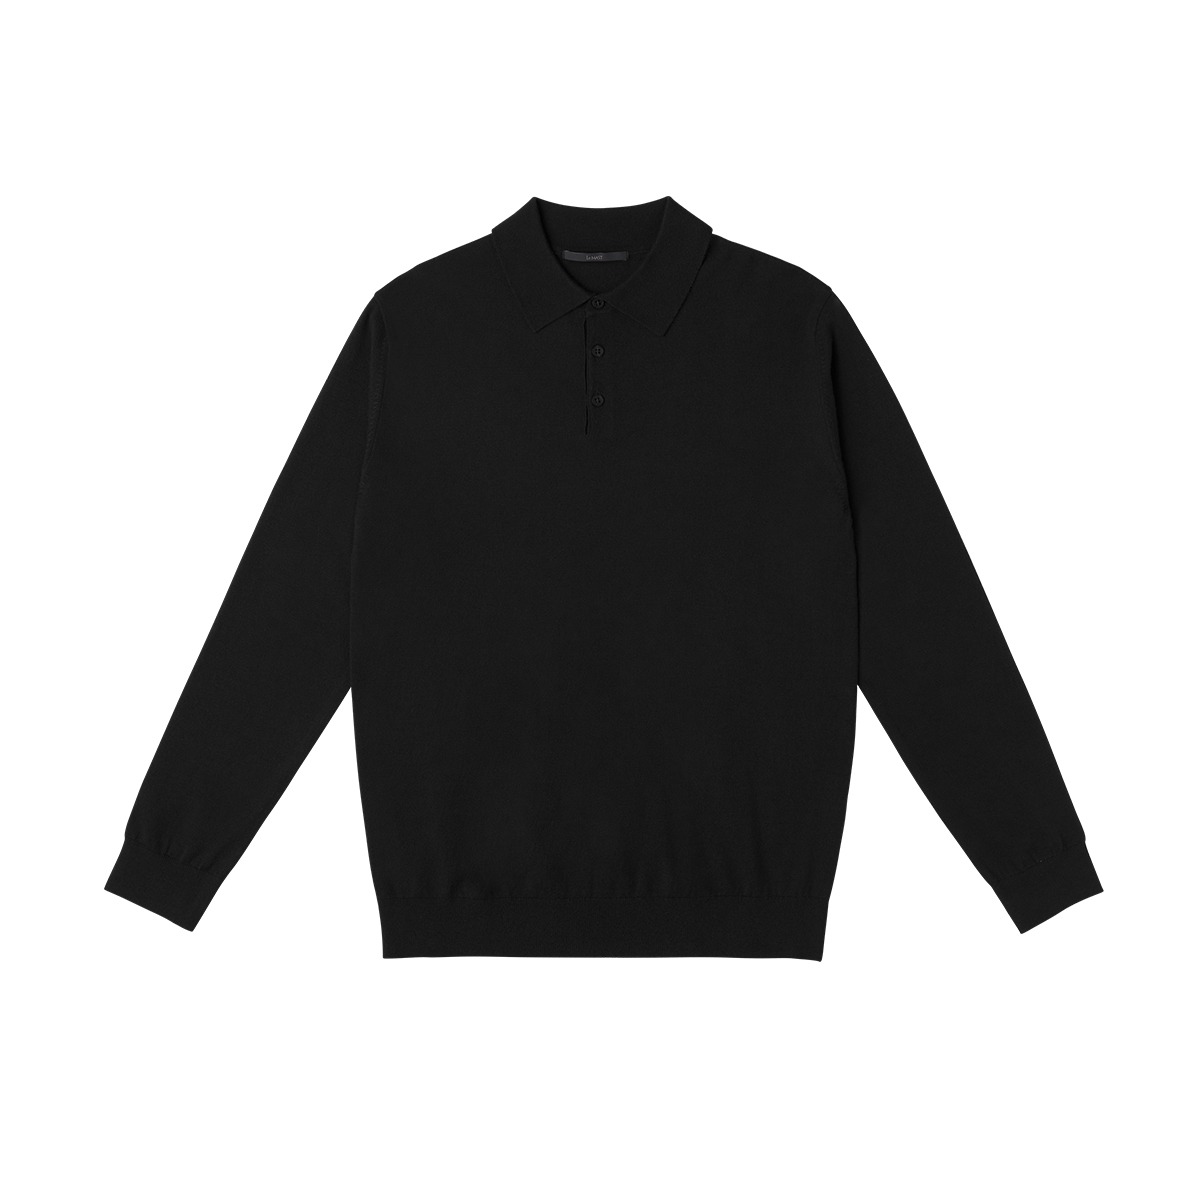 Black Solid Collar neck Sweater